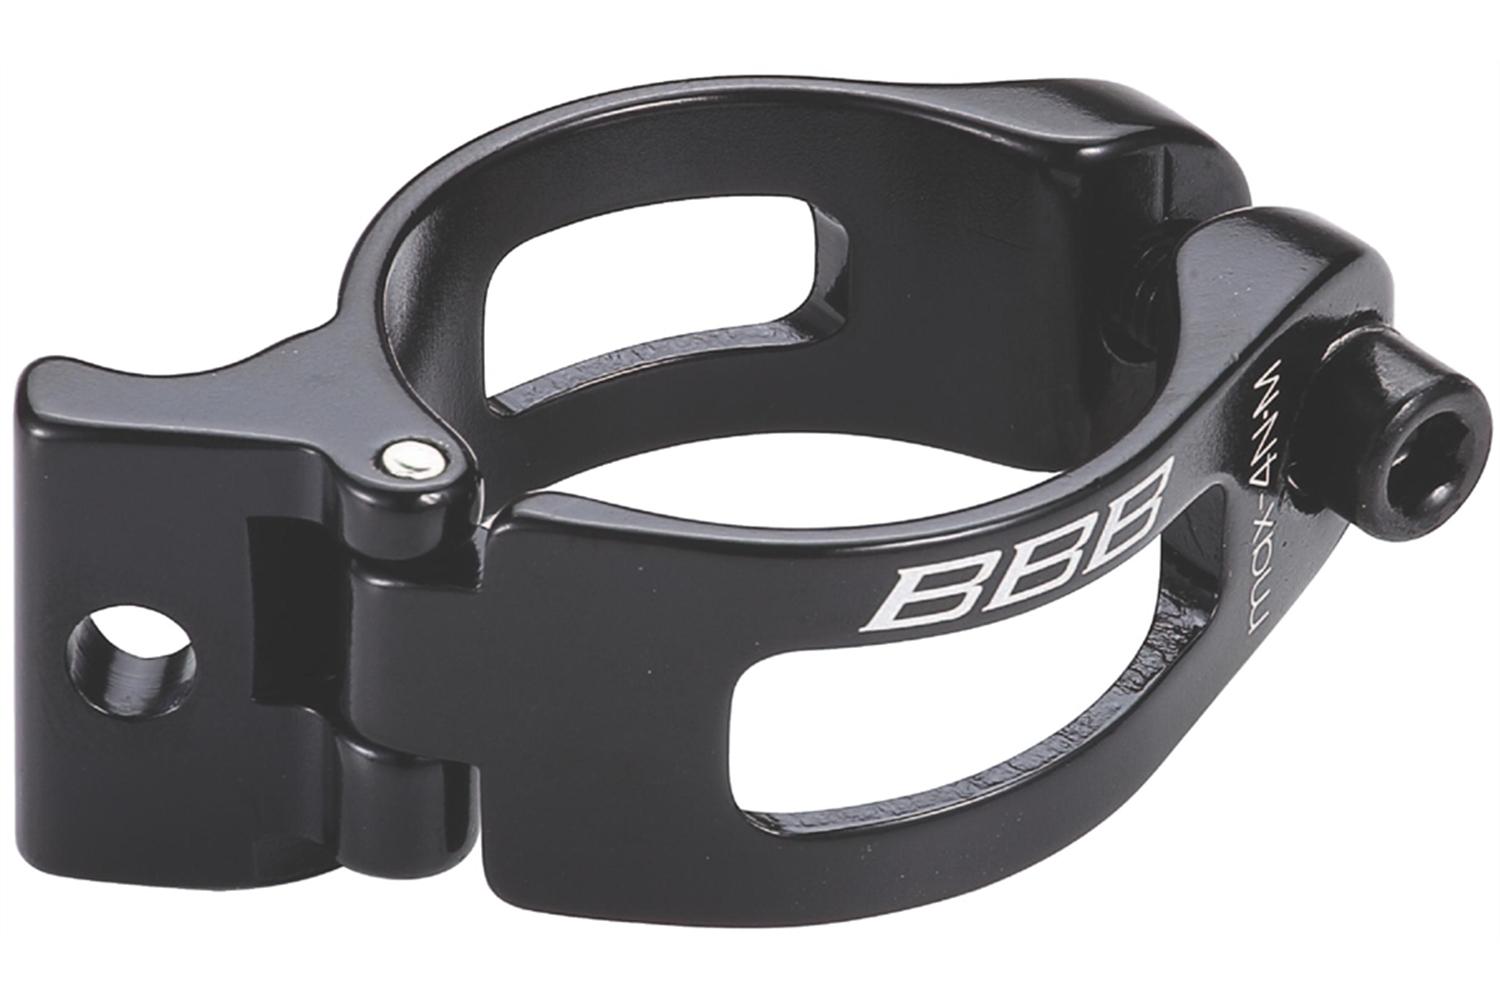 Bbb Bsp-90 Shiftfix Front Derailleur Clamp  Black